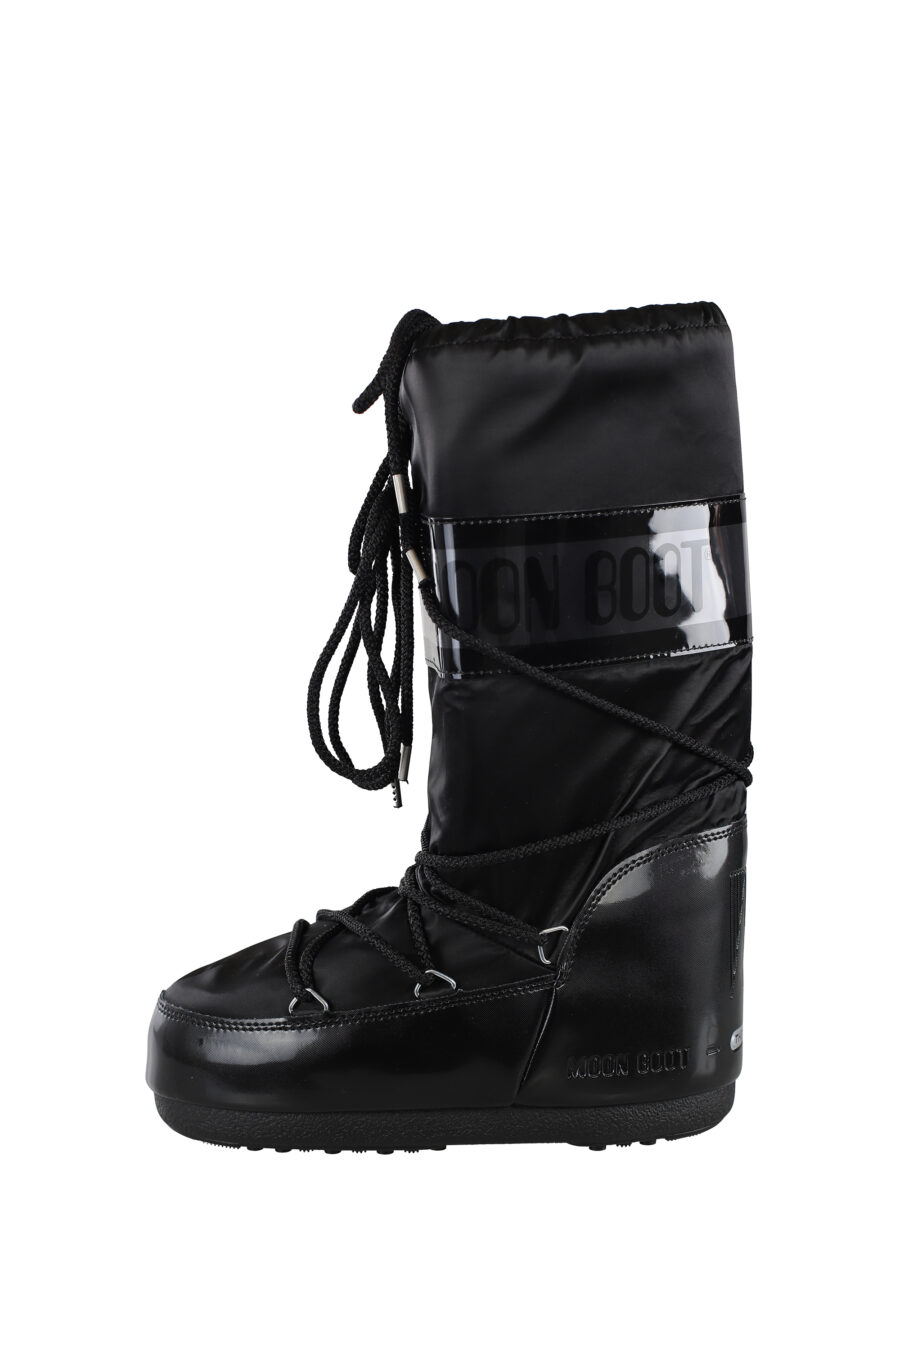 Black snow boots with monochrome white logo - IMG 6803